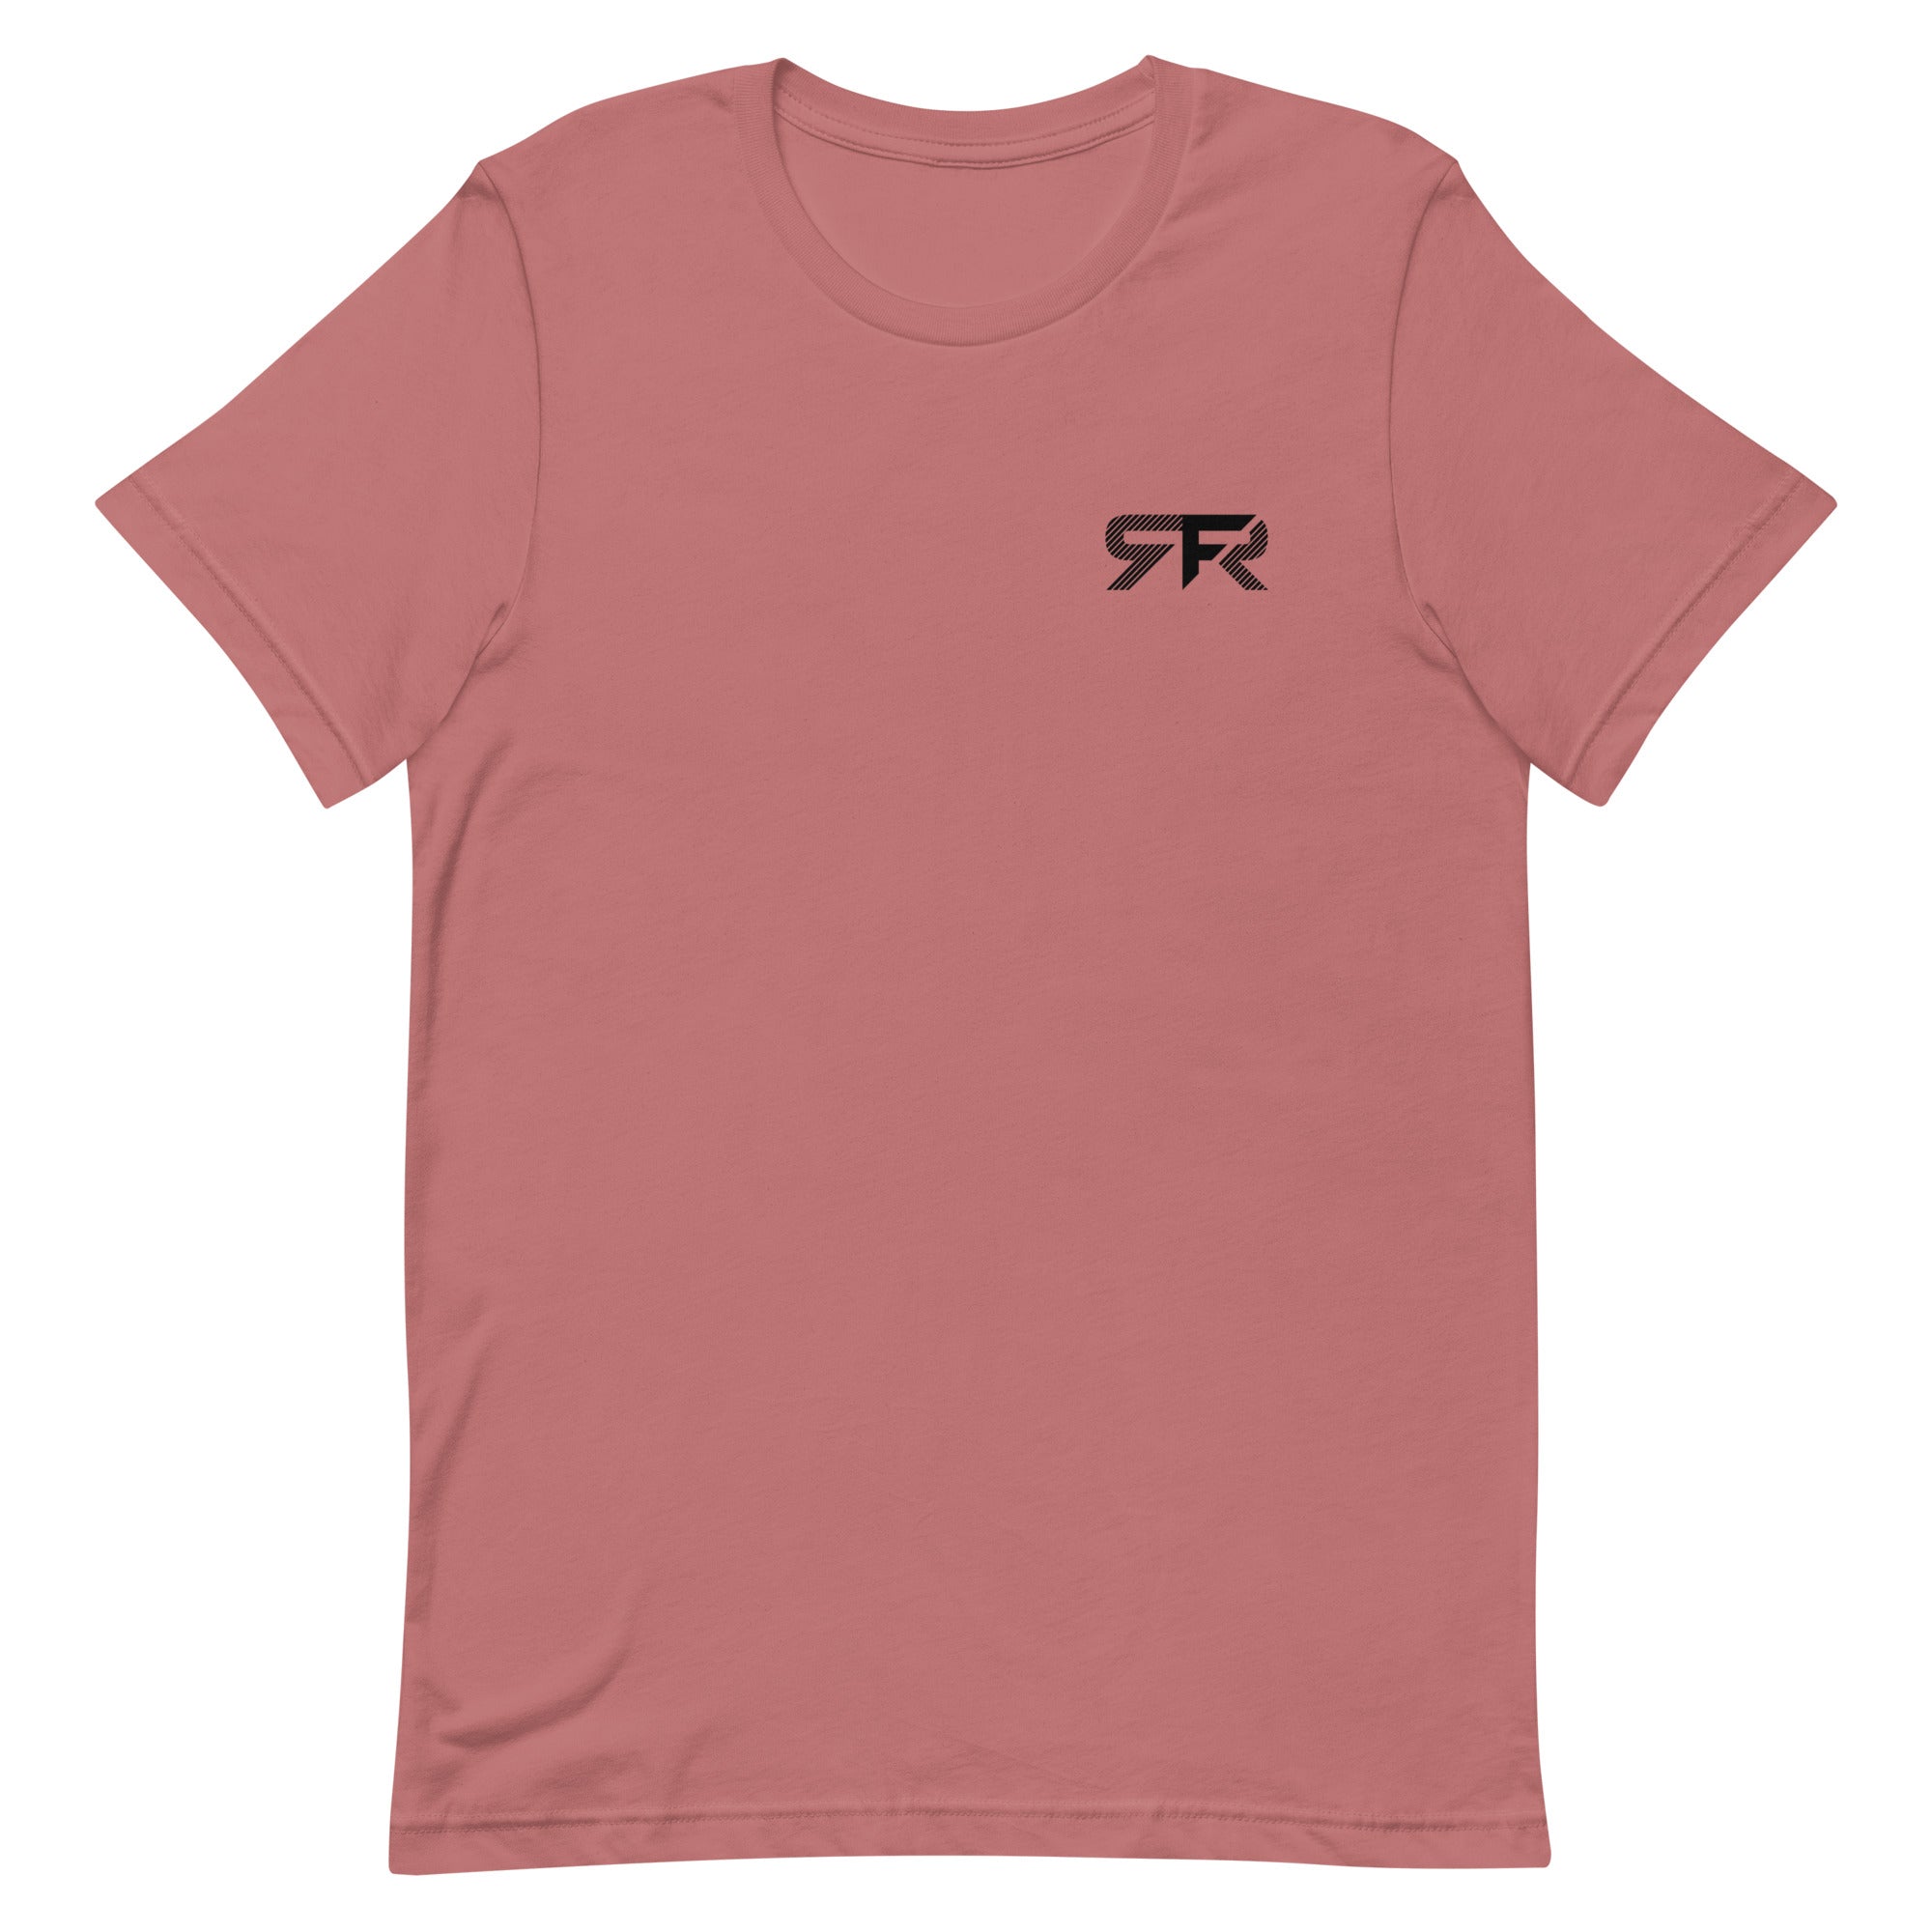 RFR Linear Shirt